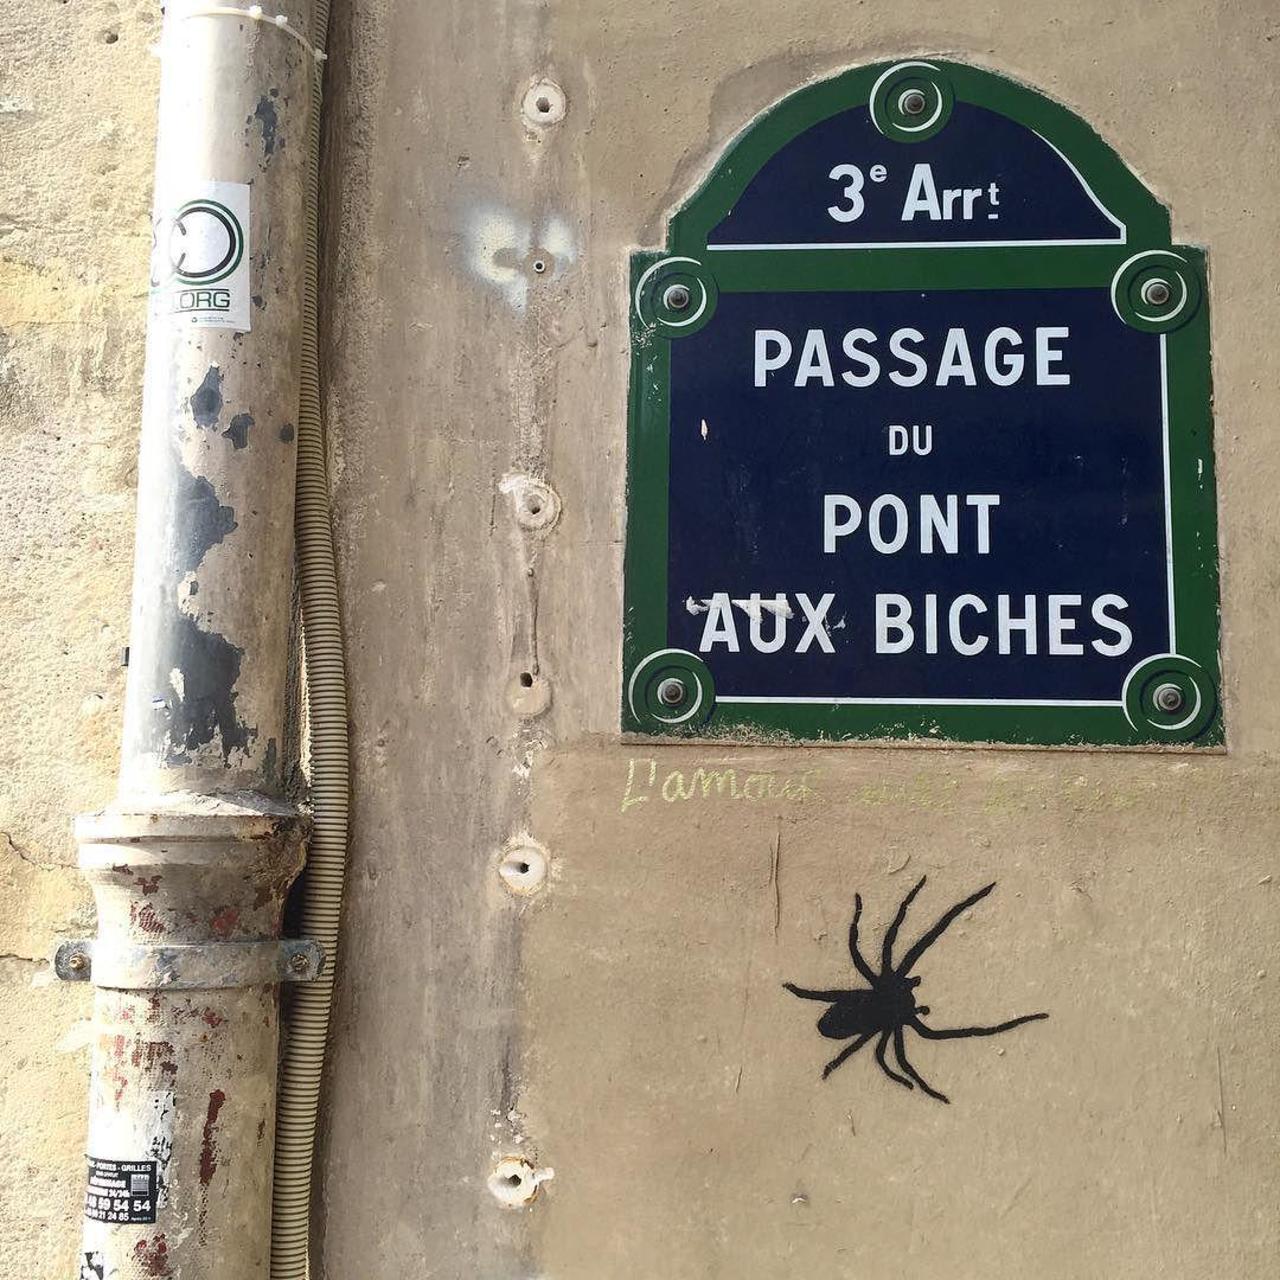 #Paris #graffiti photo by @hookedblog http://ift.tt/1QSXnIK #StreetArt http://t.co/PrAfebLfKU